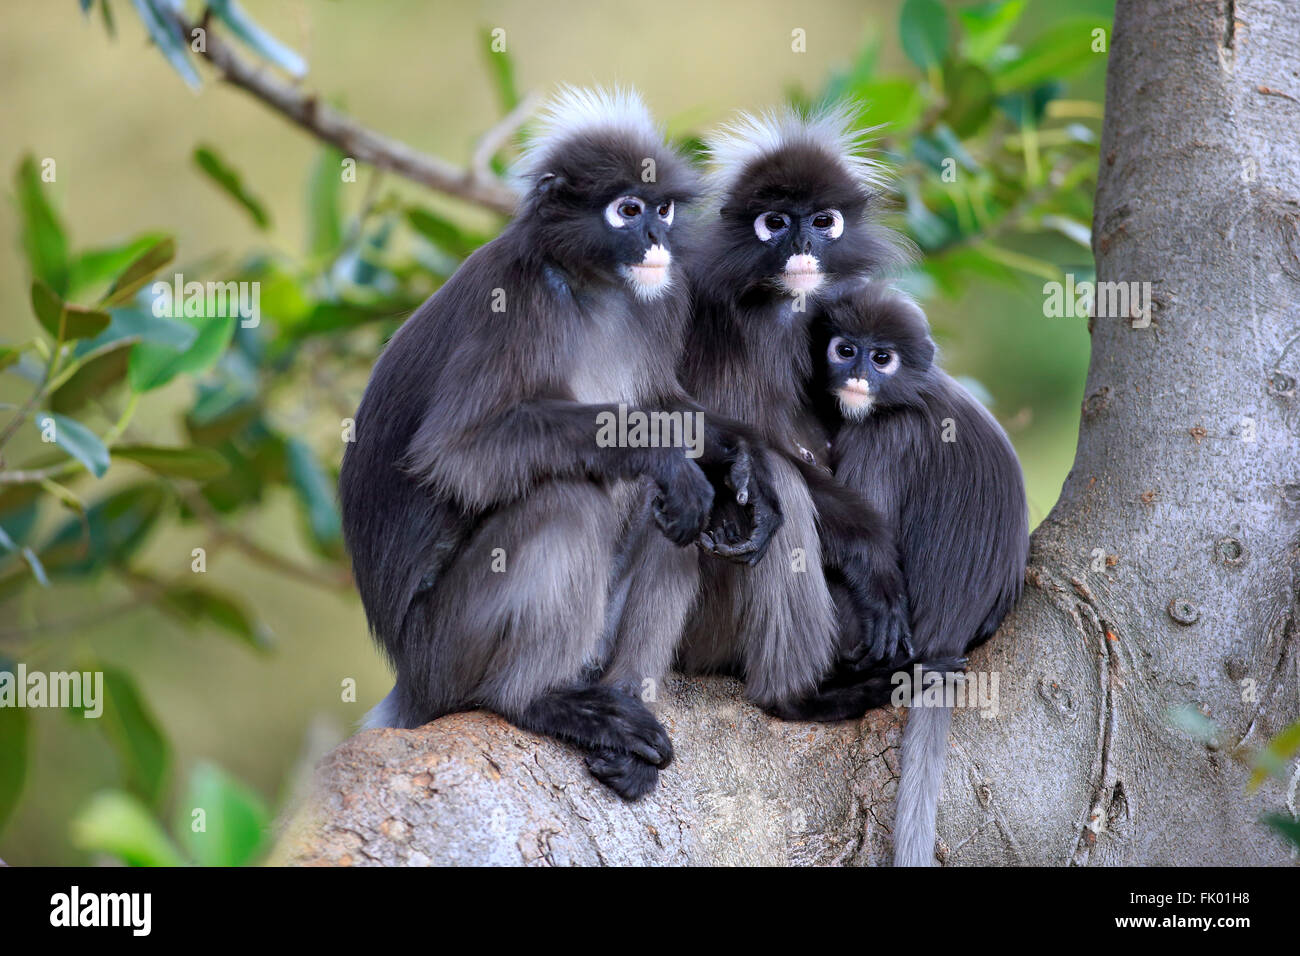 Dusky leaf monkey hi-res stock photography and images - Alamy